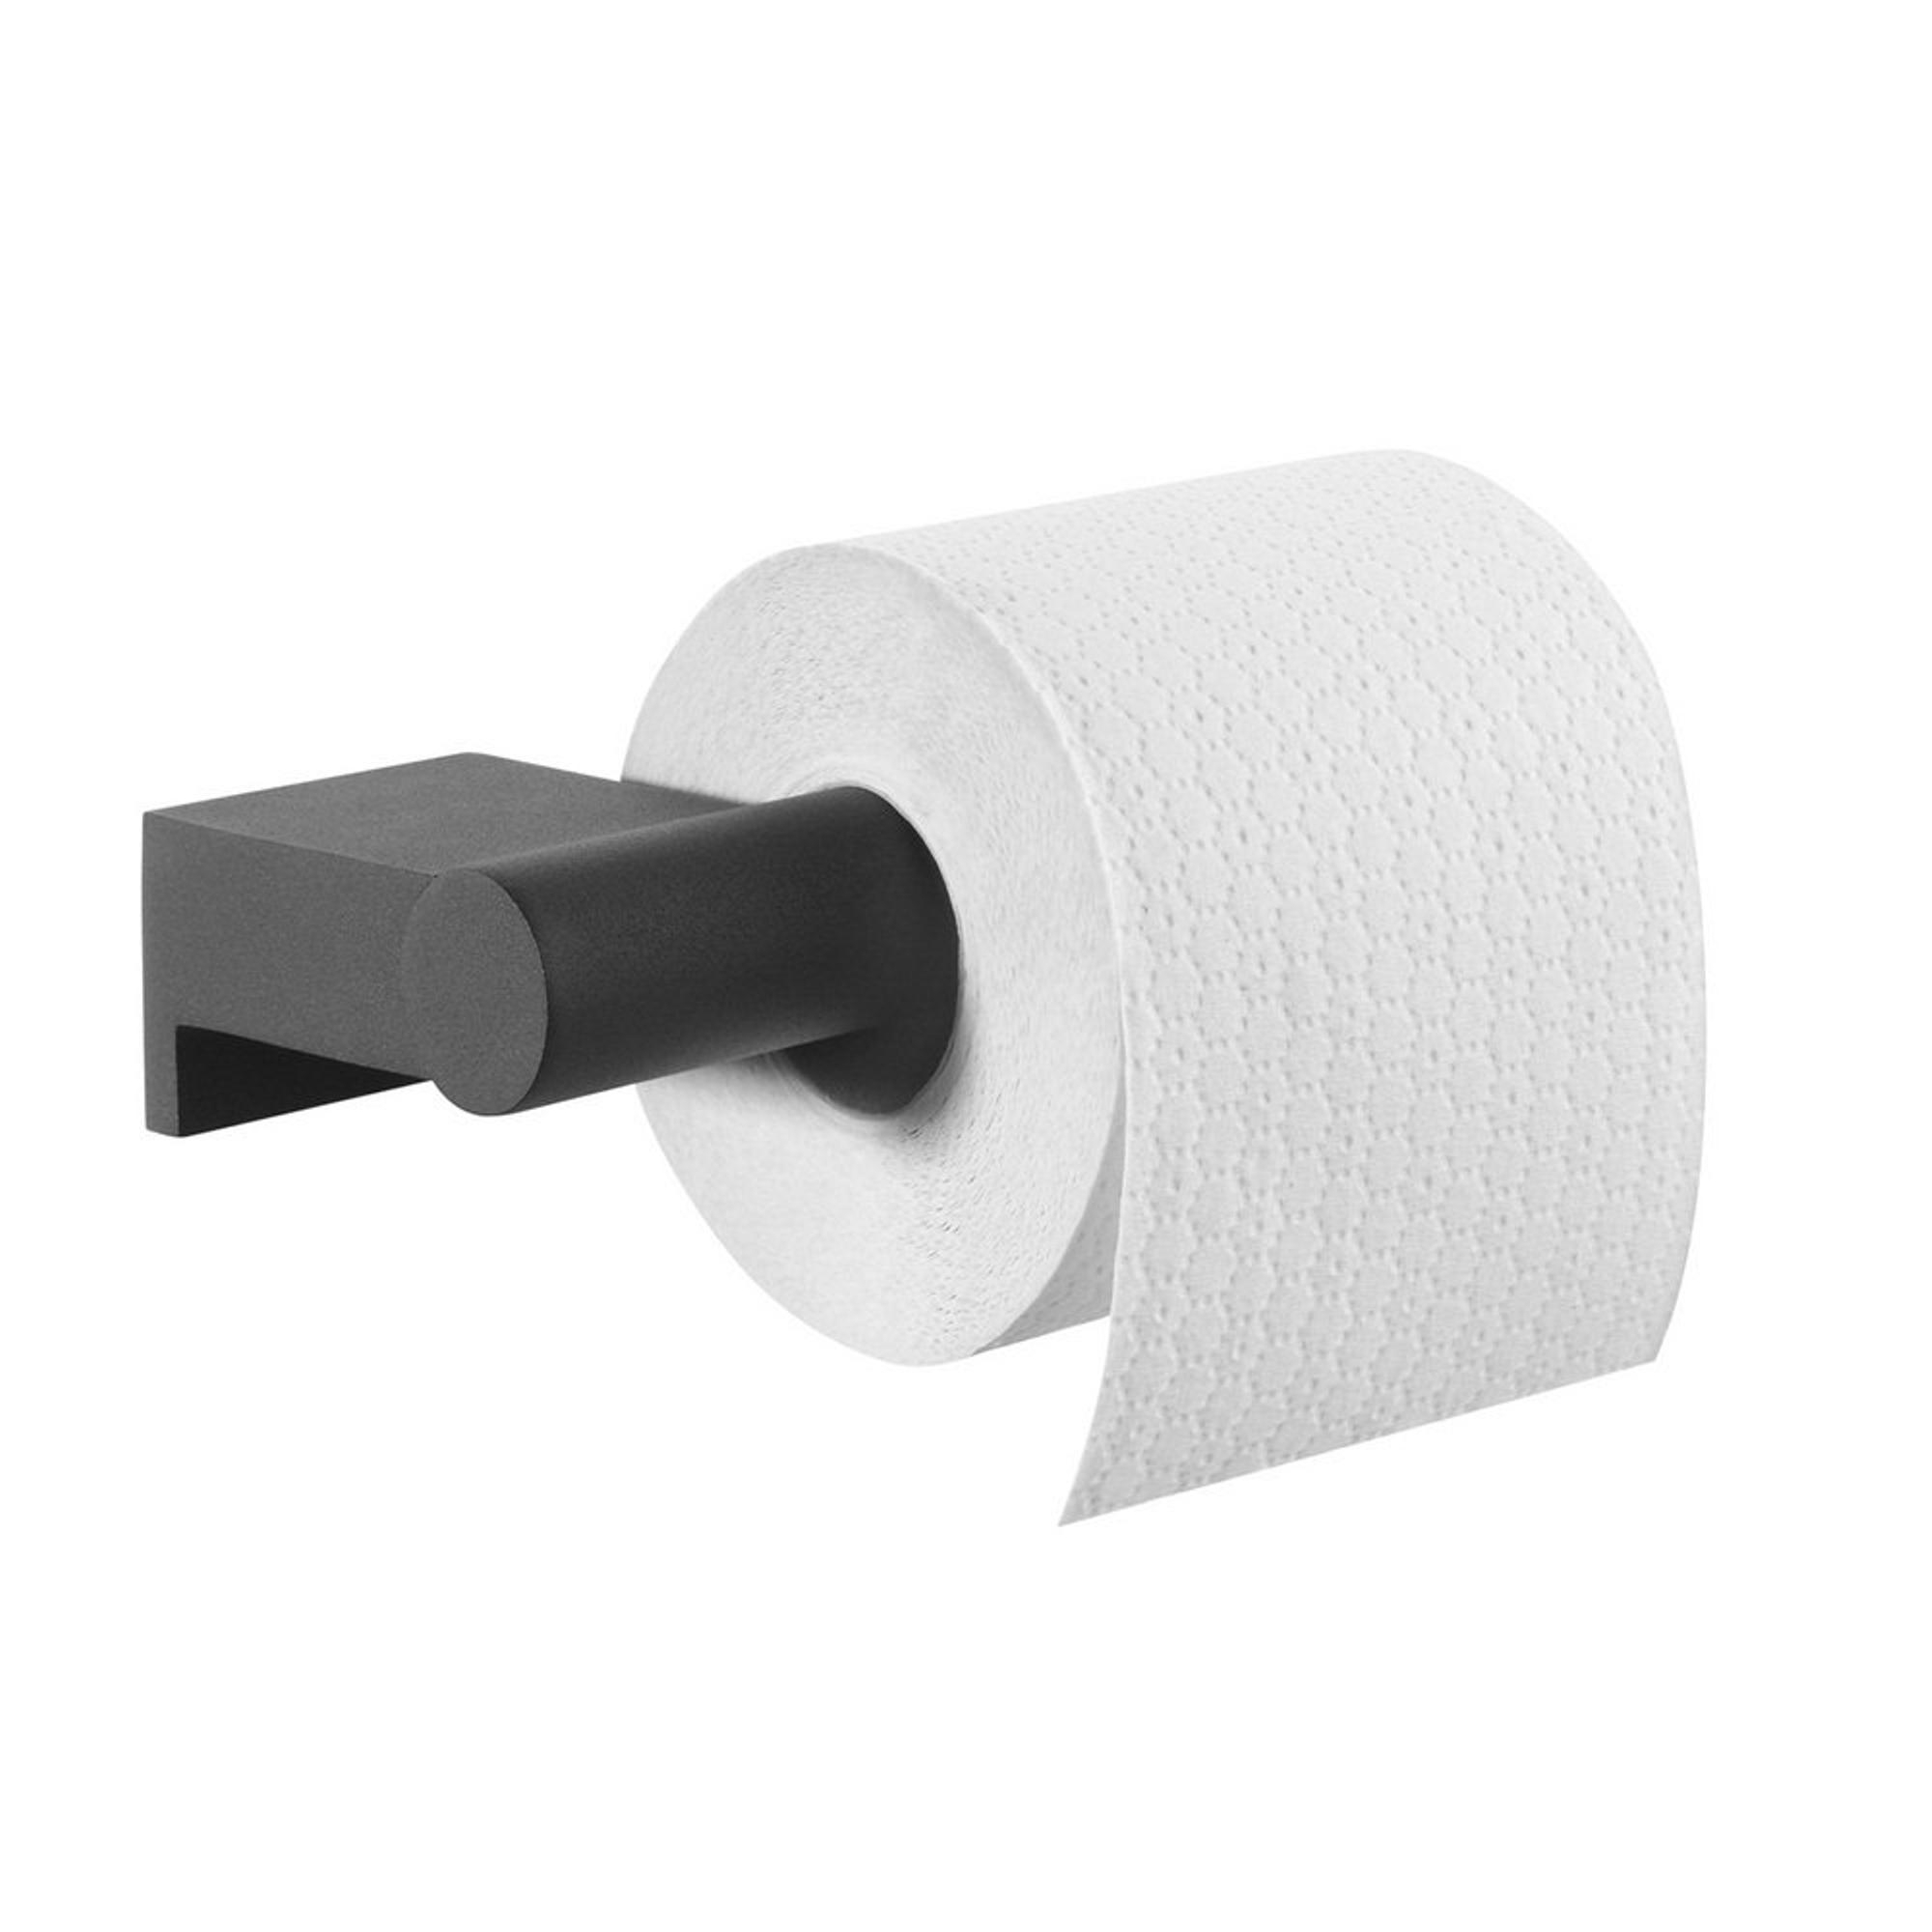 https://static.rorix.nl/image/product/tiger/2000x2000/4008912890418.jpg/tiger-bold-porte-papier-toilette-noir-co289030746.jpg